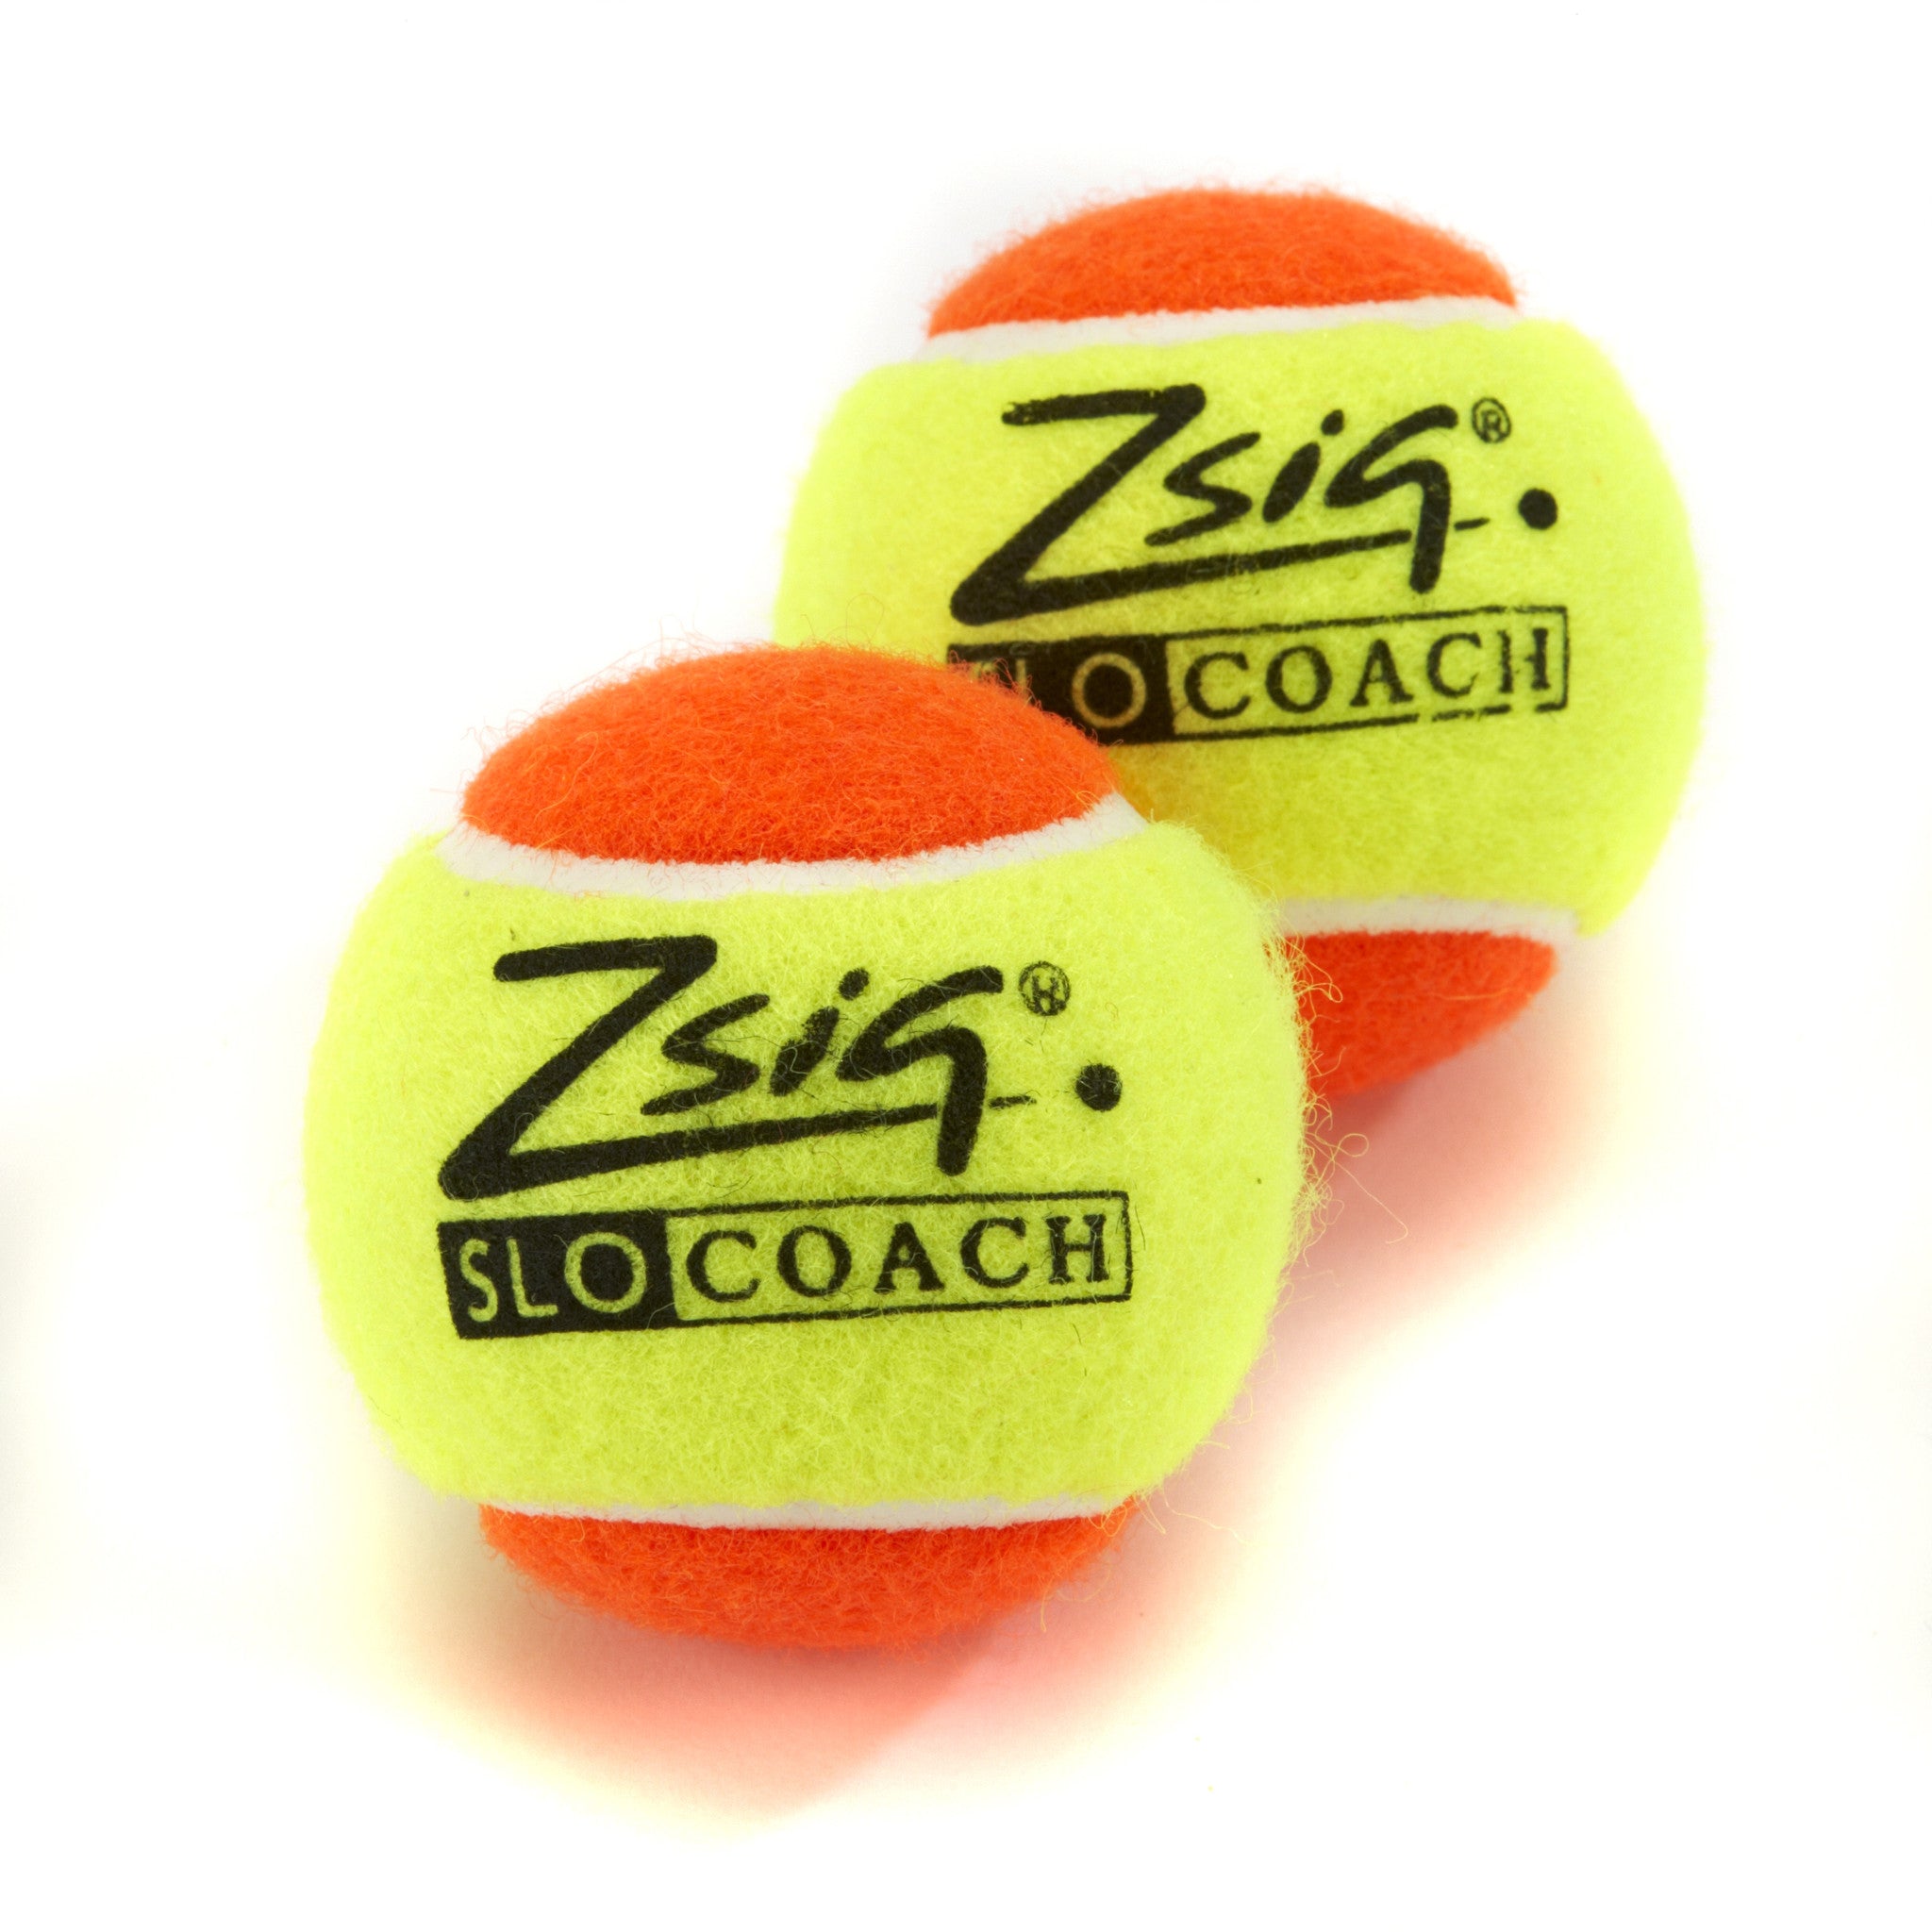 Two Zsig Slocoach Orange Mini Tennis Balls